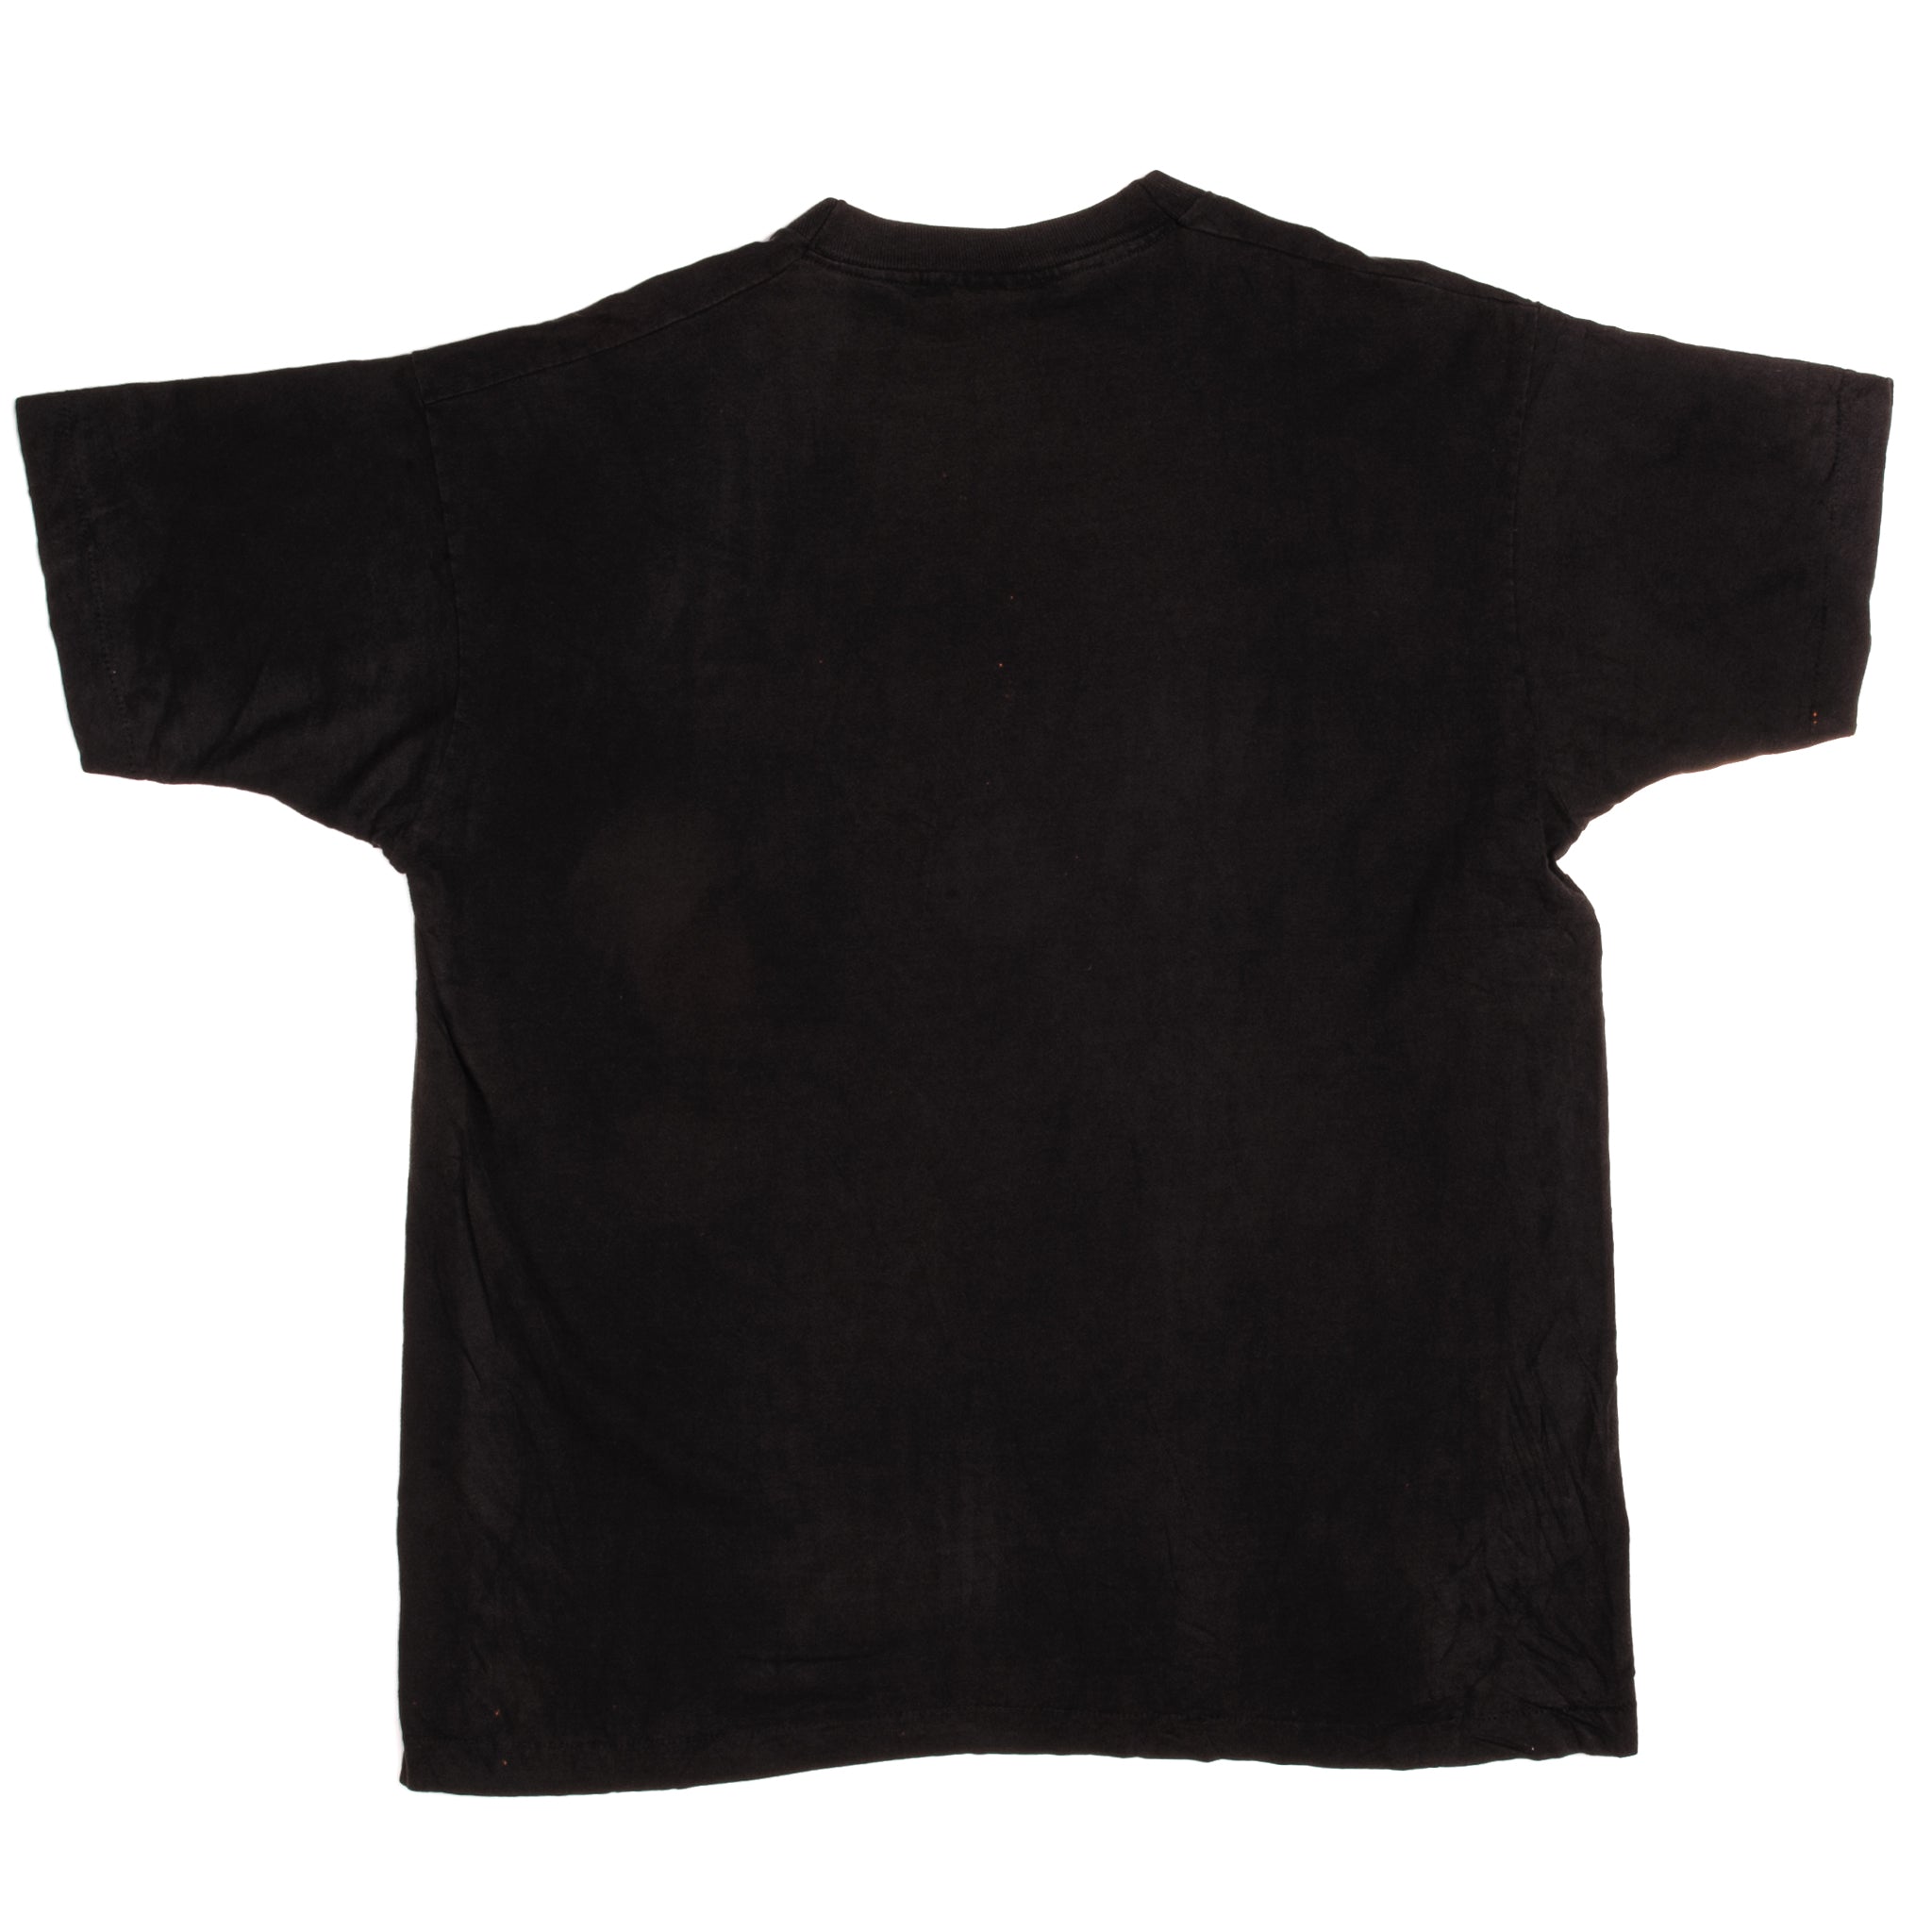 Vintage 90's Tultex NBA Chicago Bulls Sweater Black (XL) – Chop